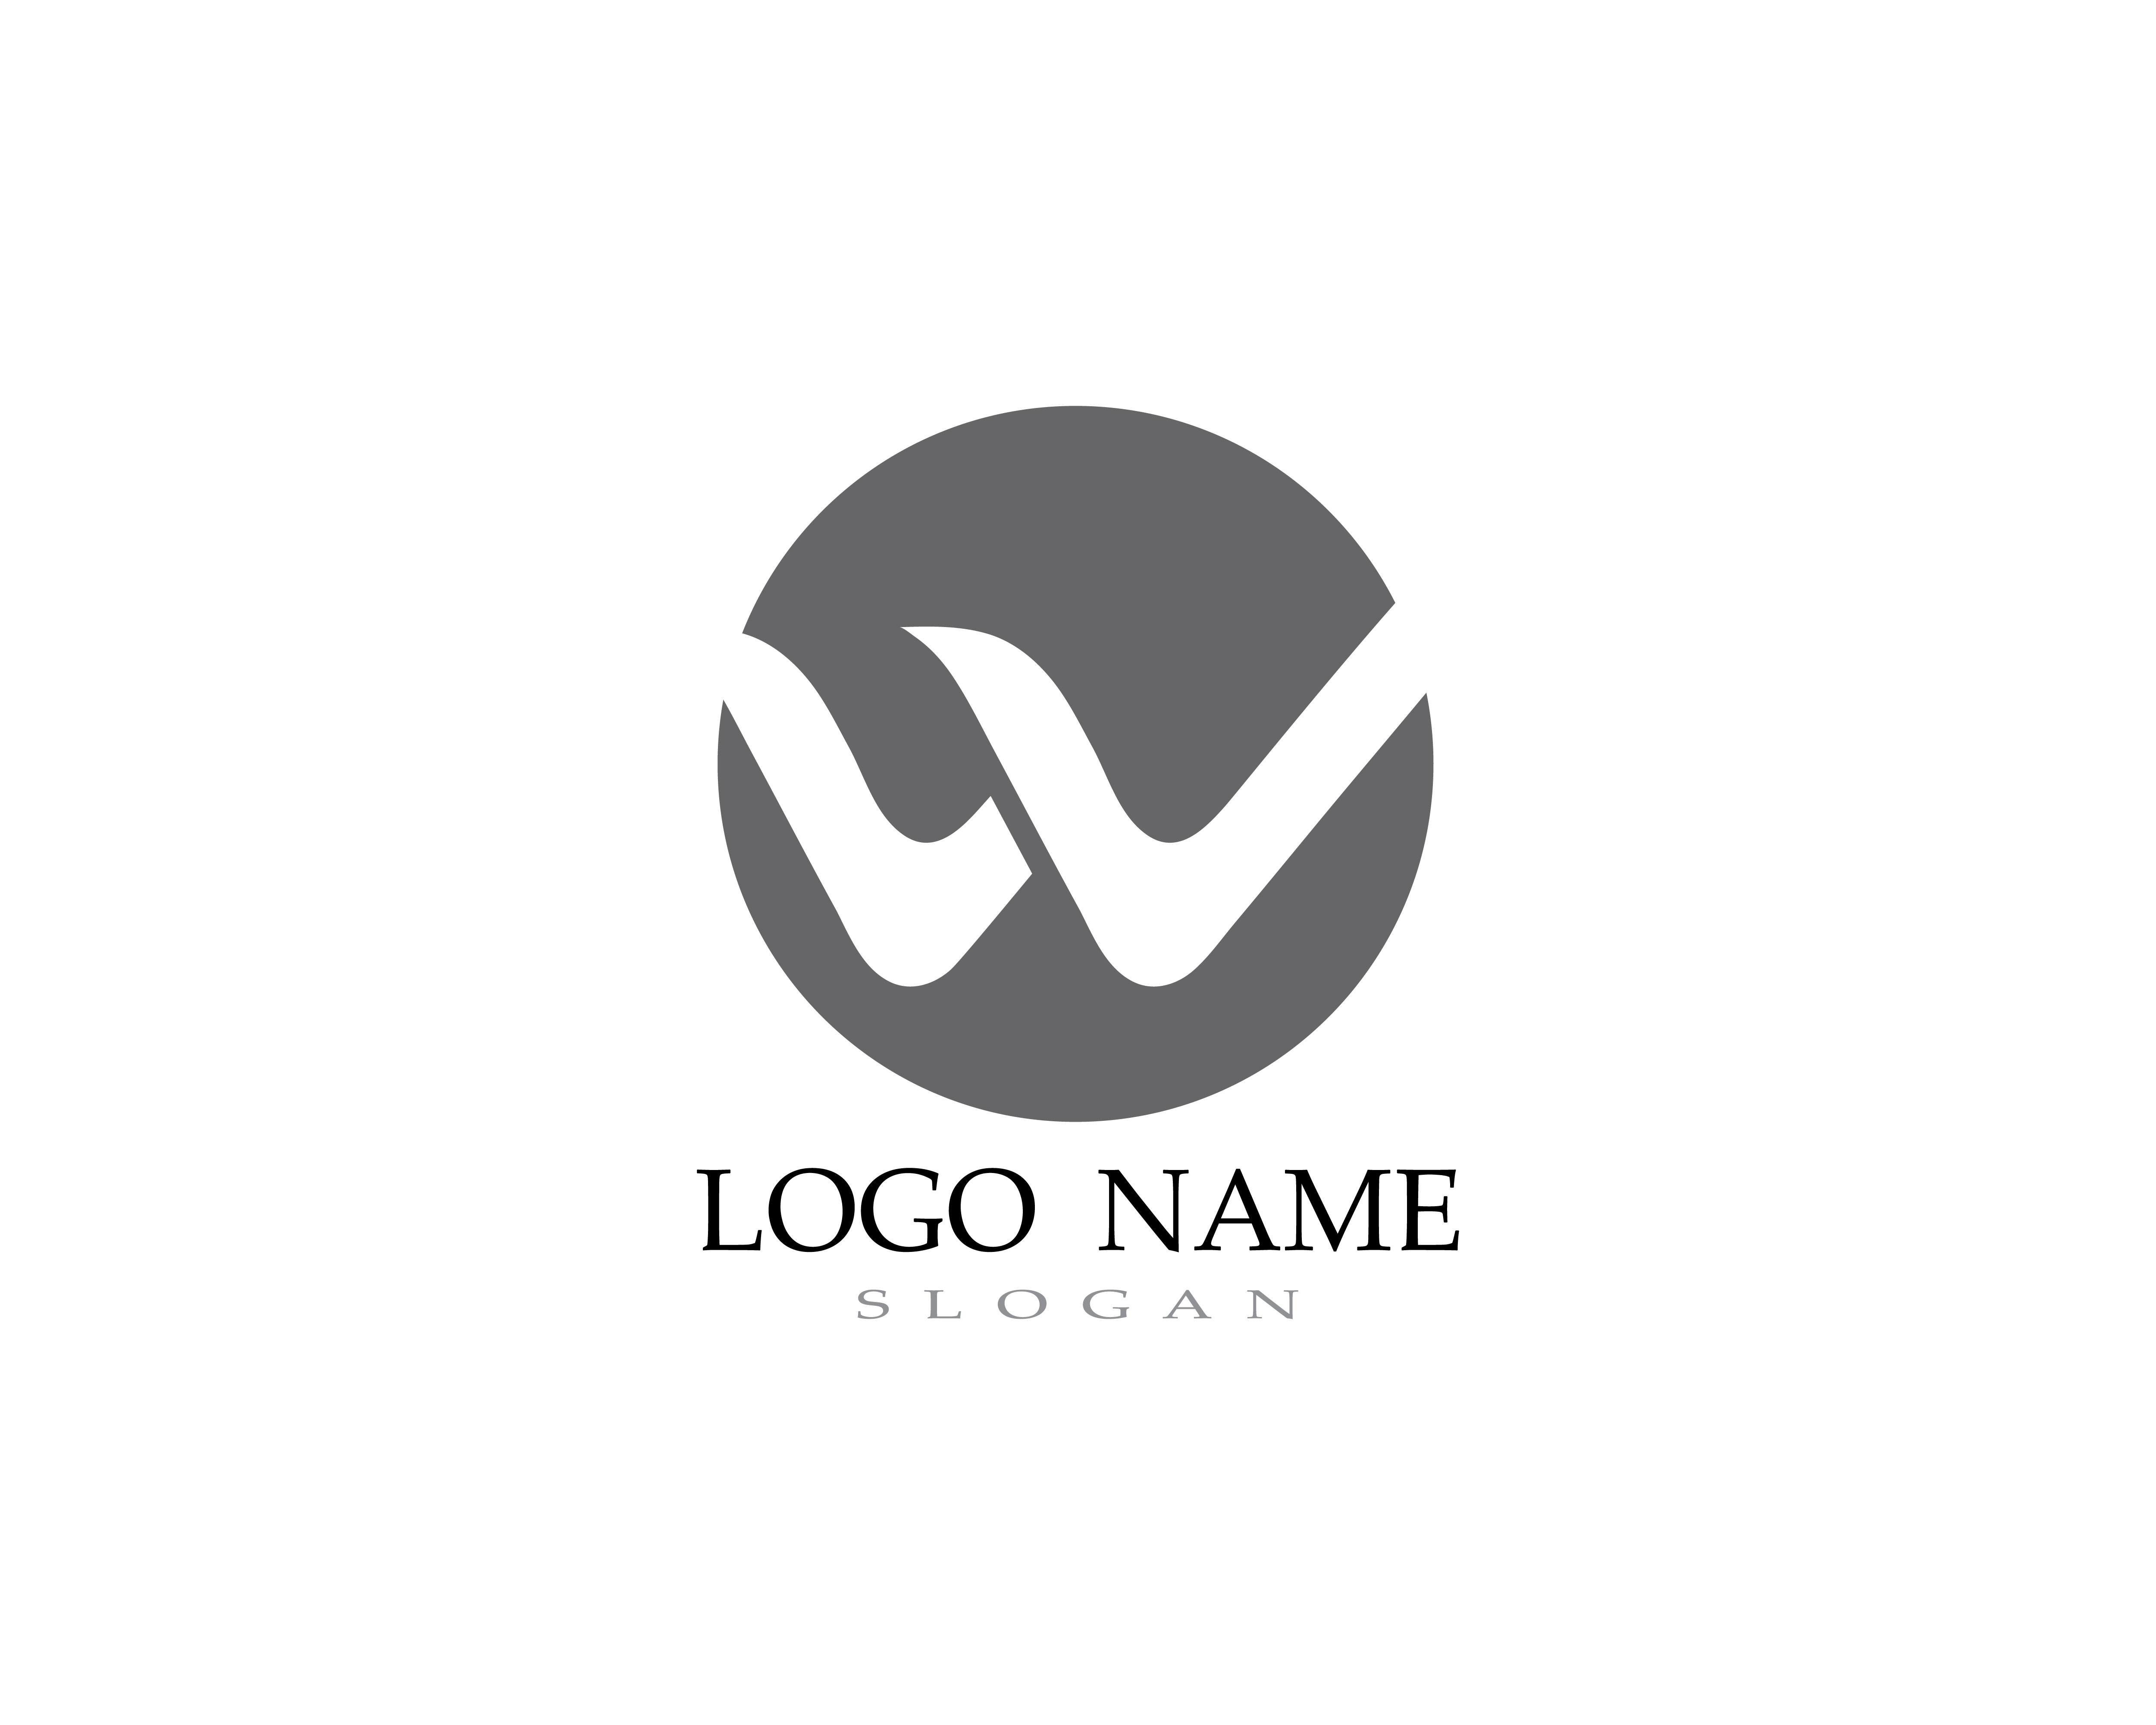 W logo and symbol business vectors 565377 Vector Art at Vecteezy